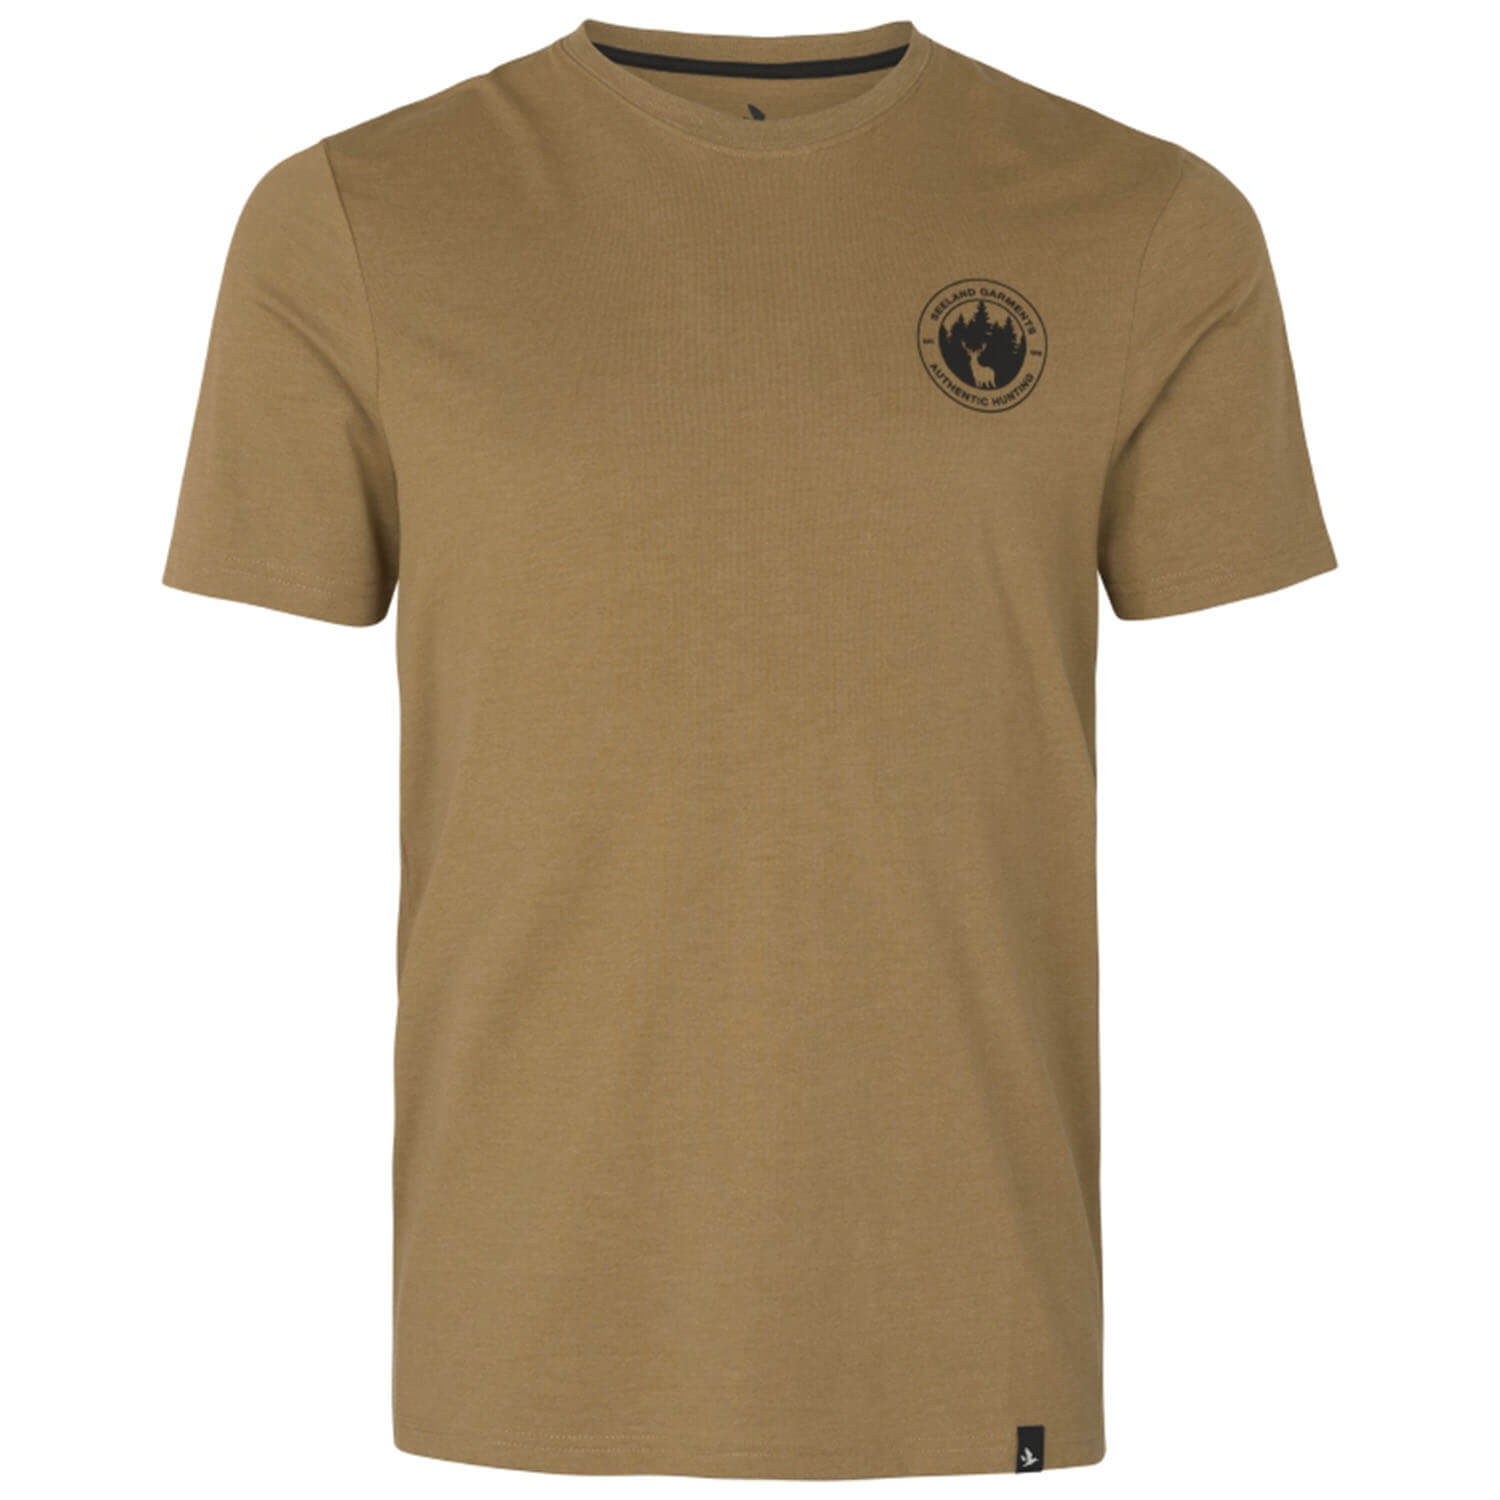 Seeland T-shirt Saker (antique bronze melange) - T-Shirts